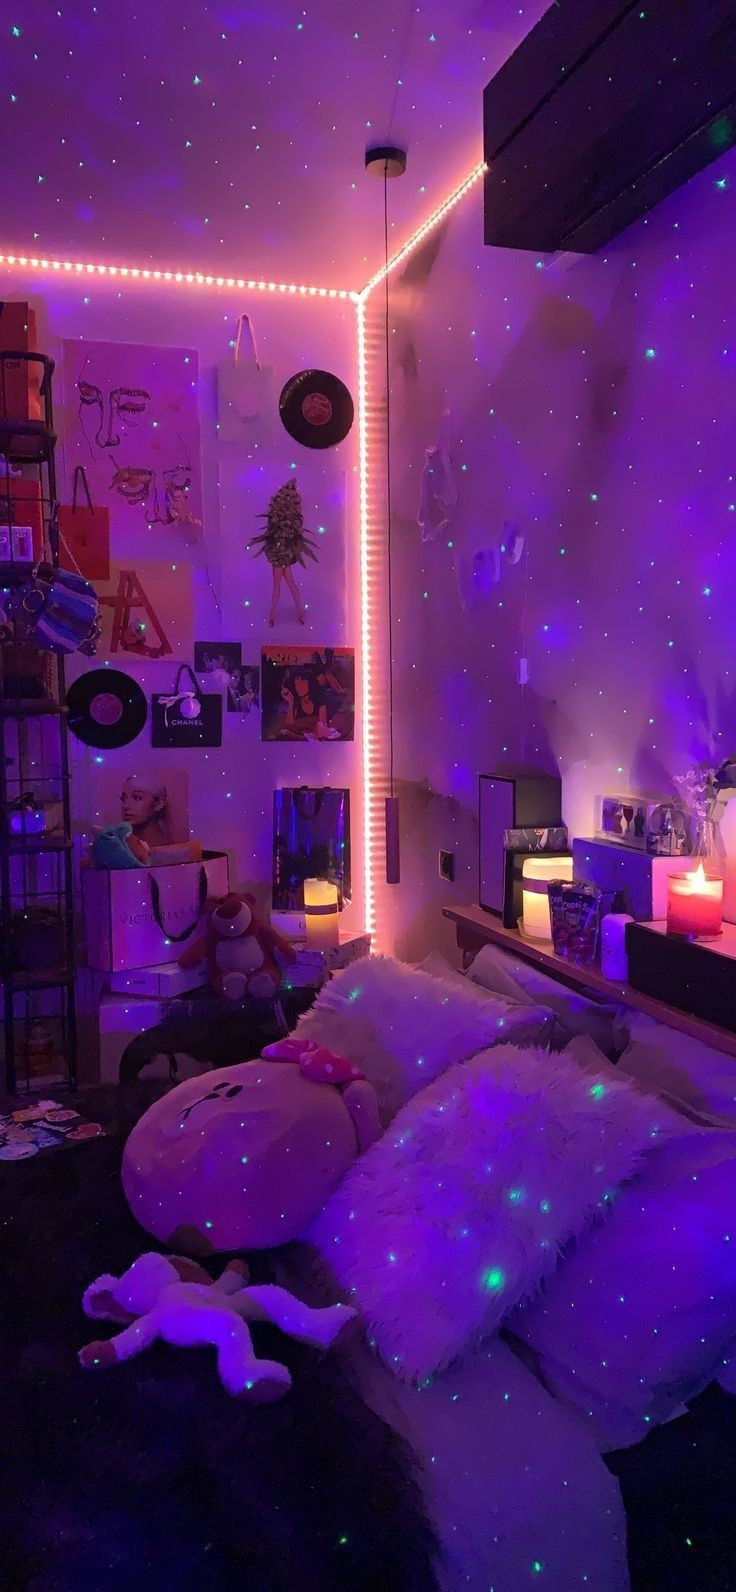 Led Lights In Bedroom Wallpapers - Wallpaper Cave